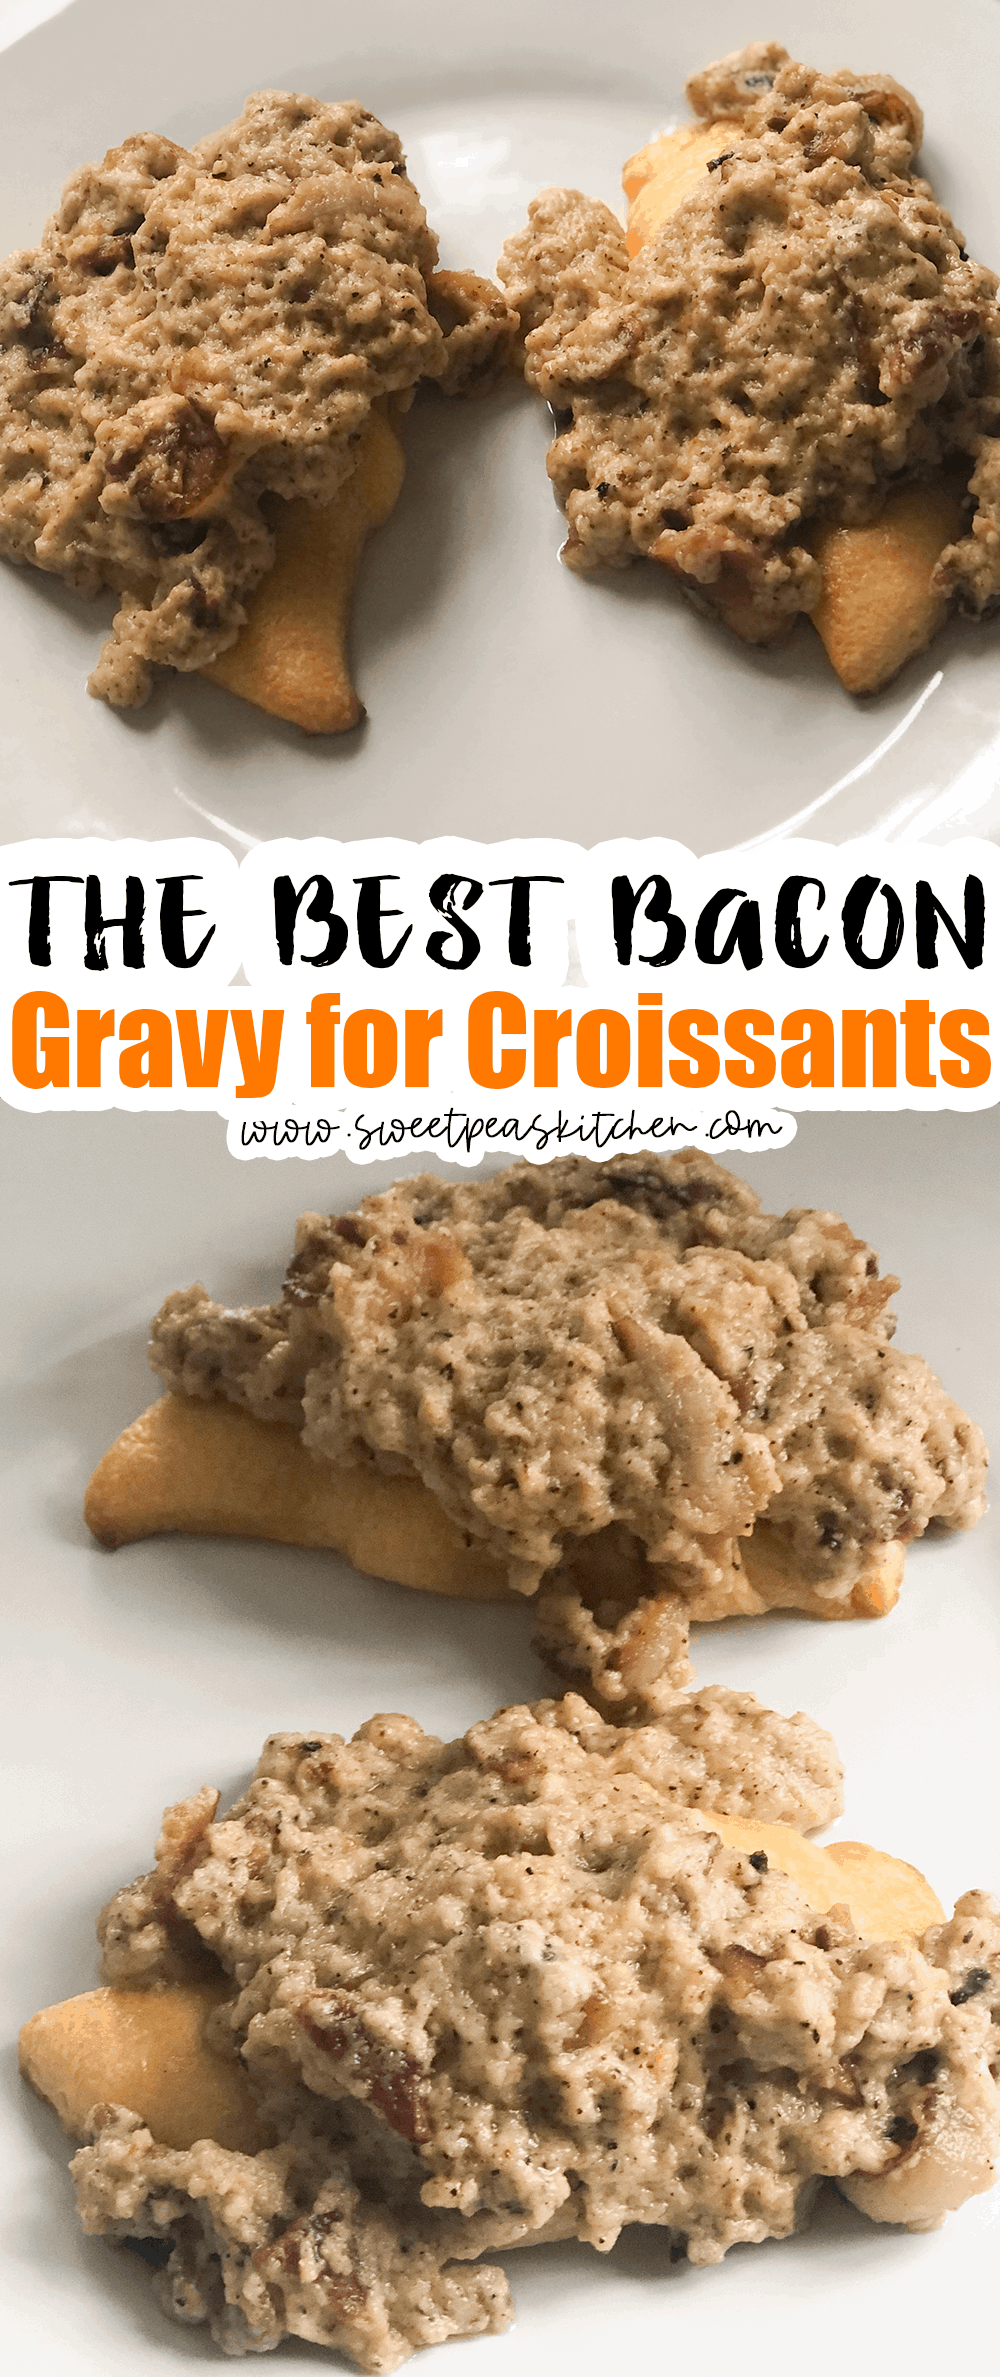 The Best Bacon Gravy for Croissants